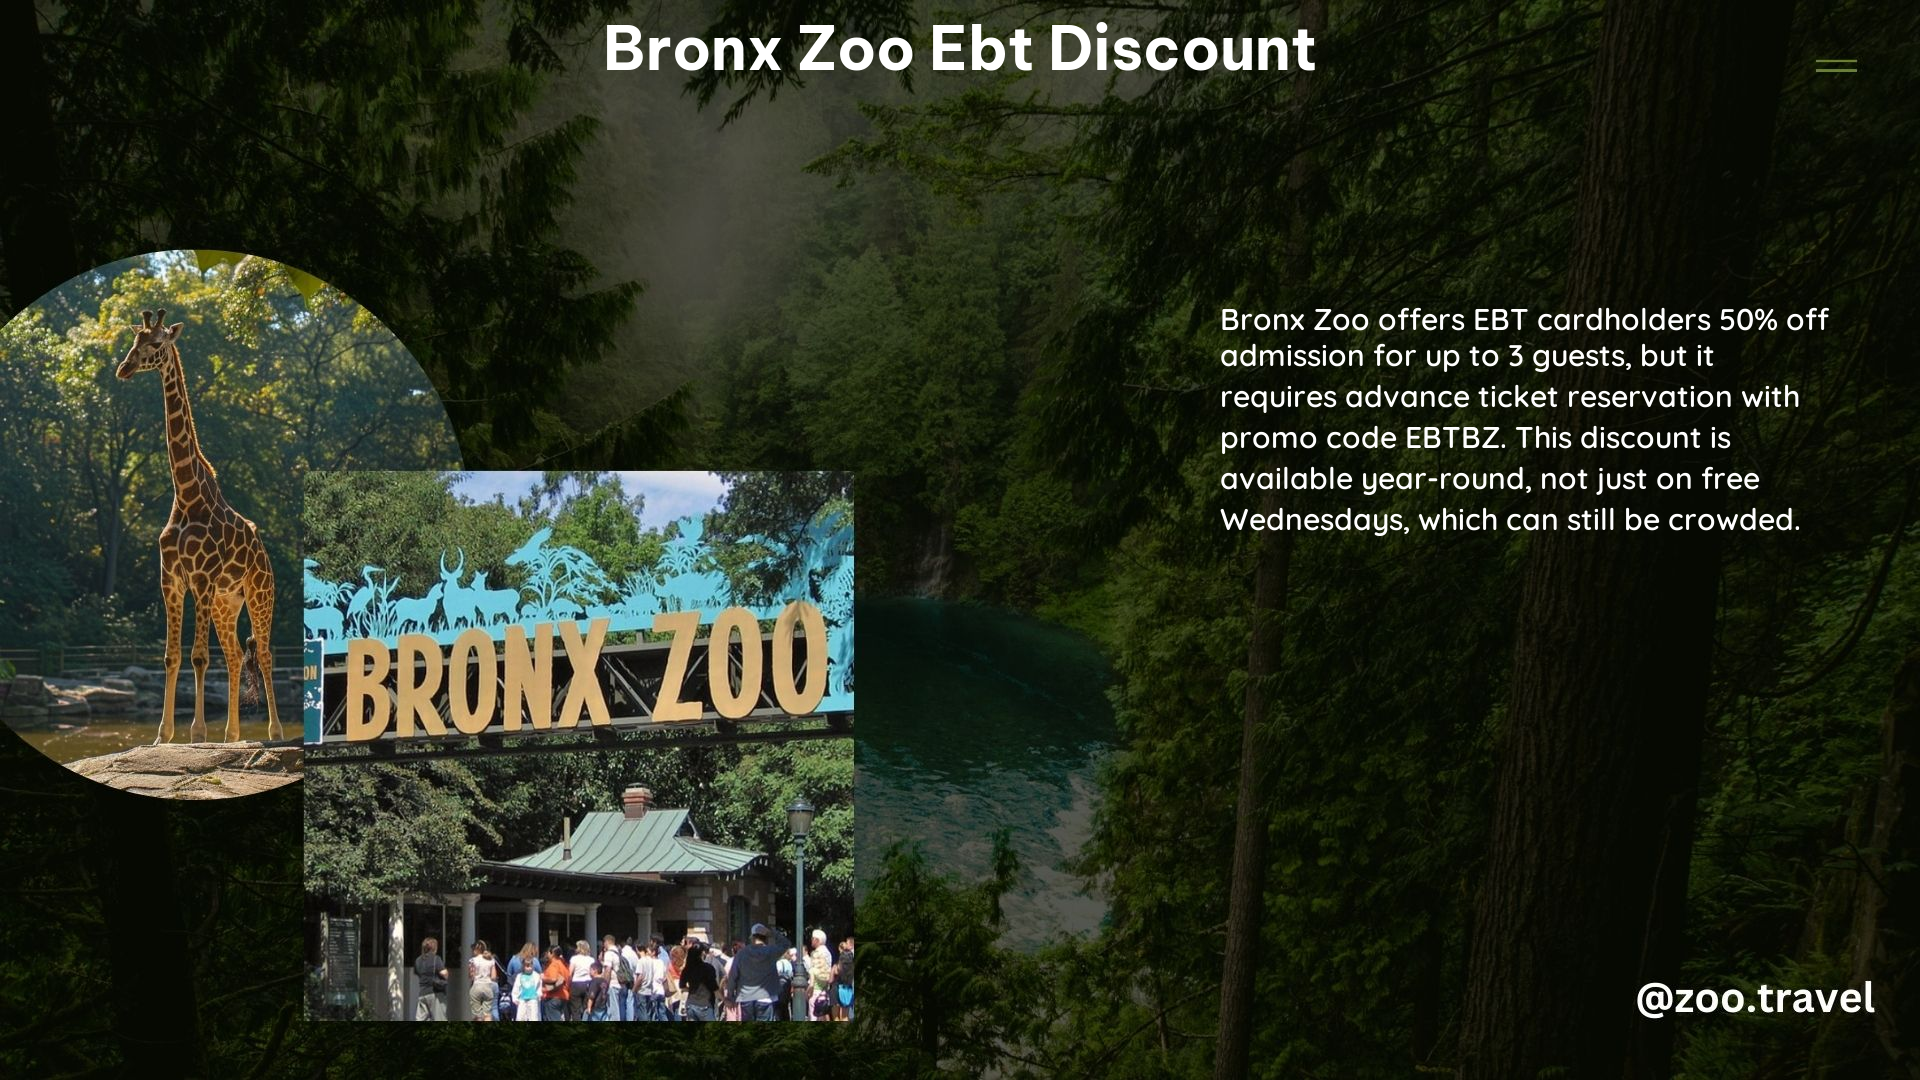 Bronx Zoo Ebt Discount